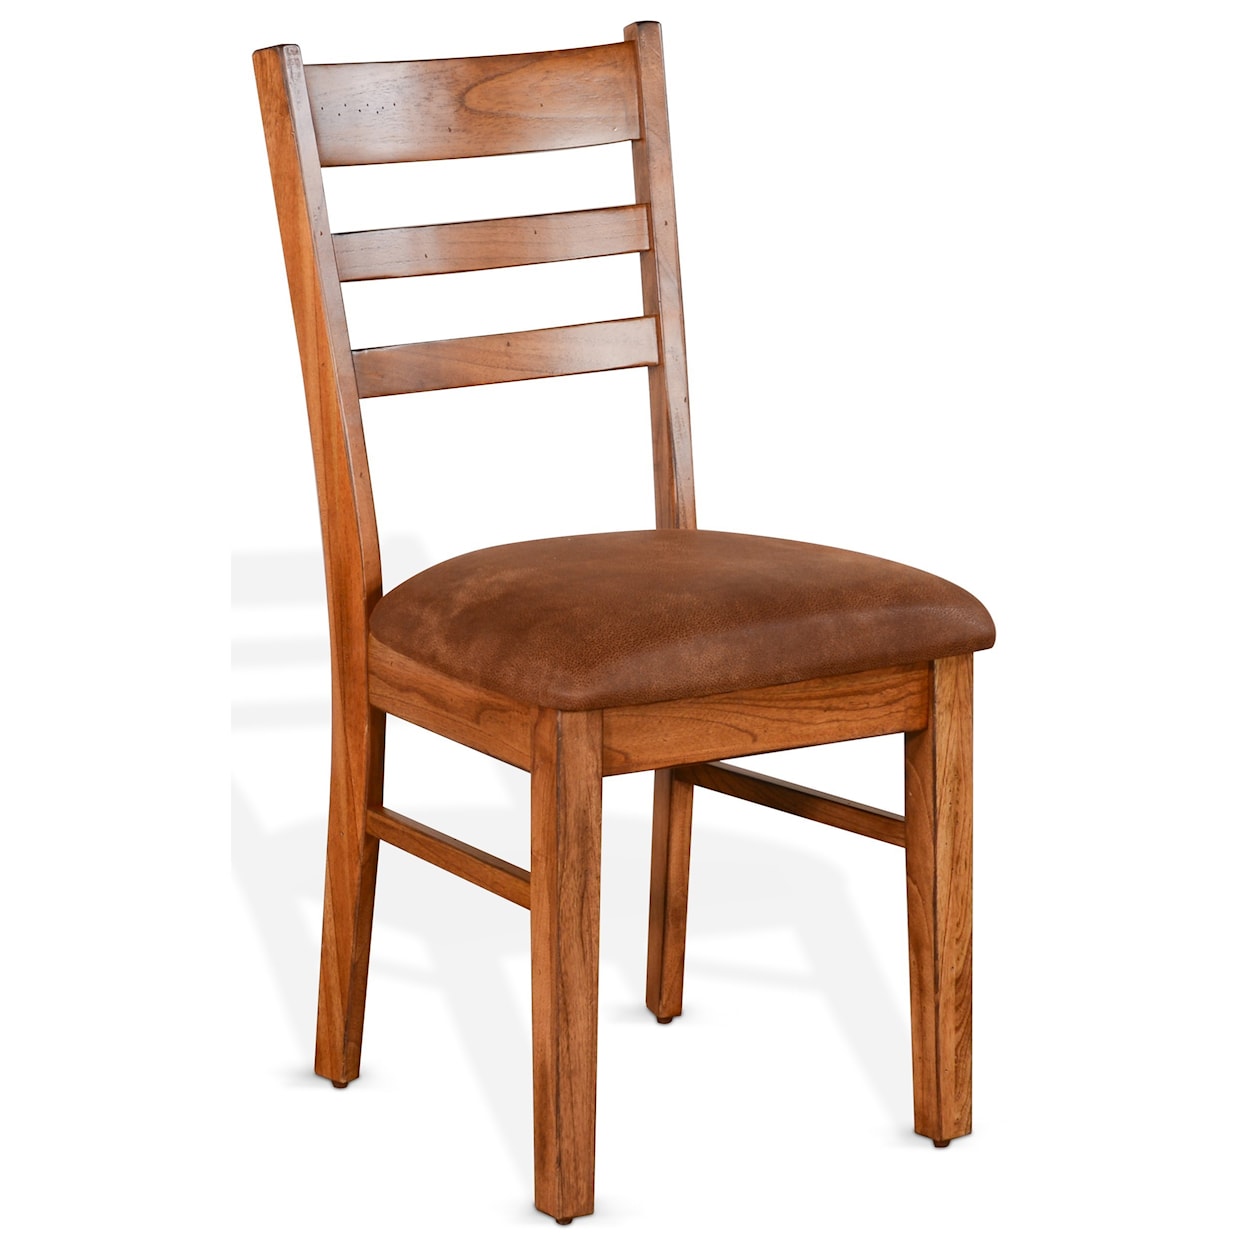 Sunny Designs Sedona Ladderback Chair with Cushion Seat